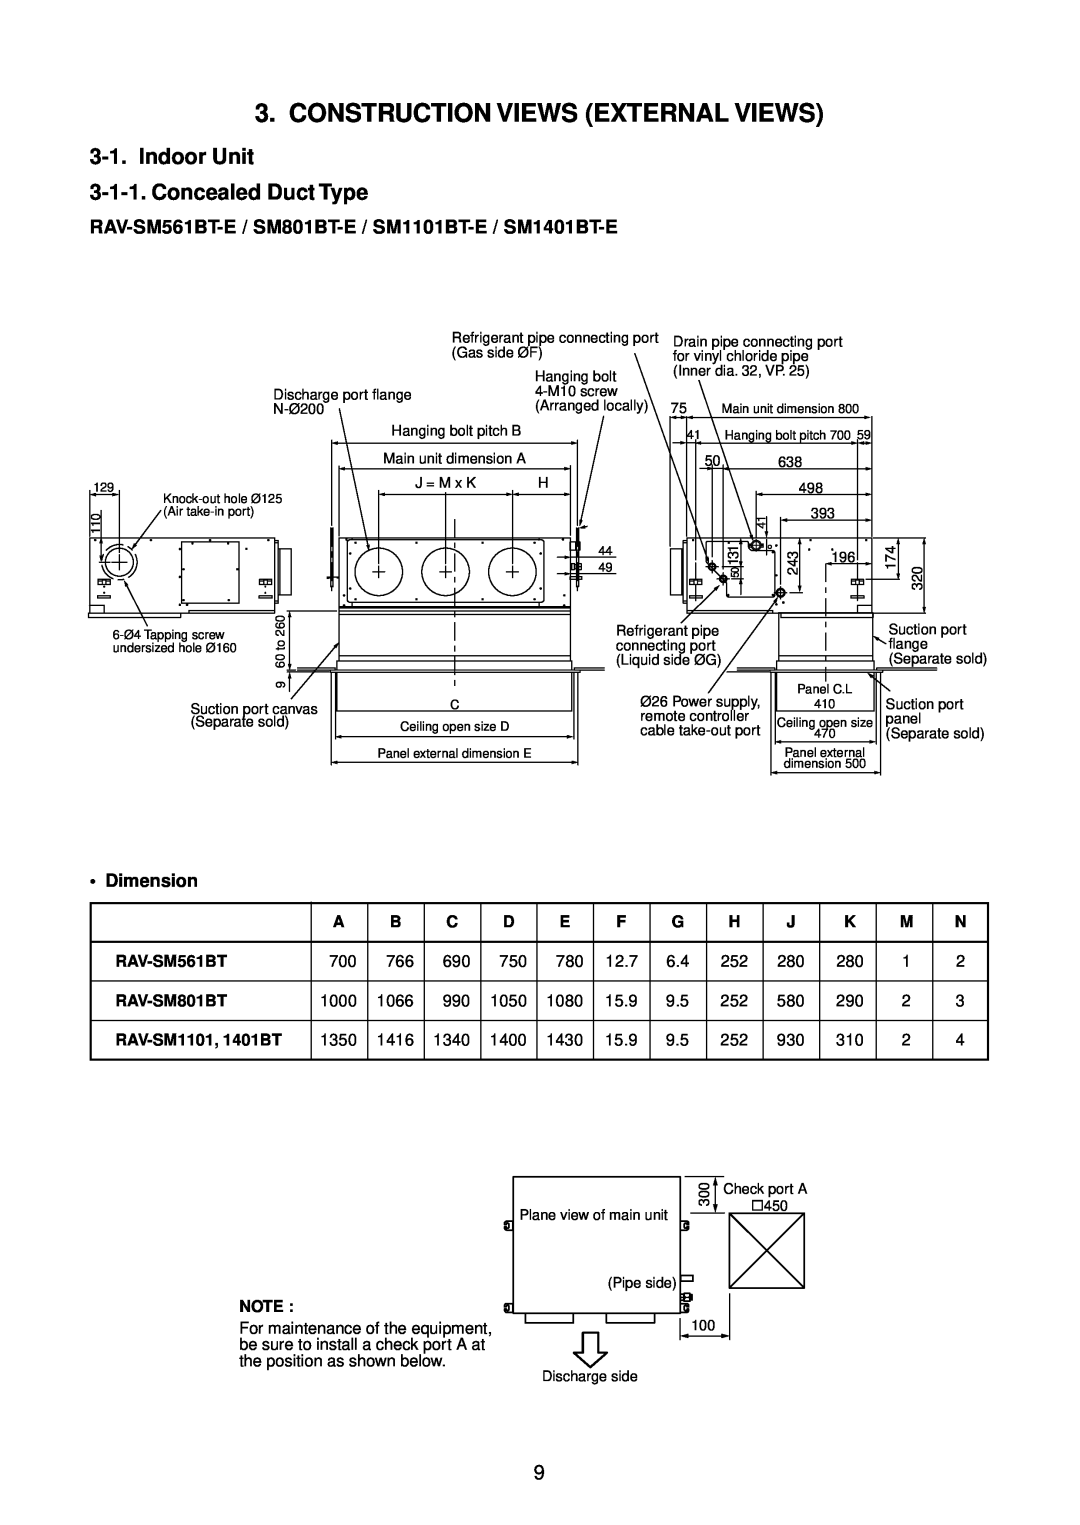 Toshiba RAV-SM801BT-E, RAV-SM561BT-E Construction Views External Views, Indoor Unit 3-1-1.Concealed Duct Type, • Dimension 